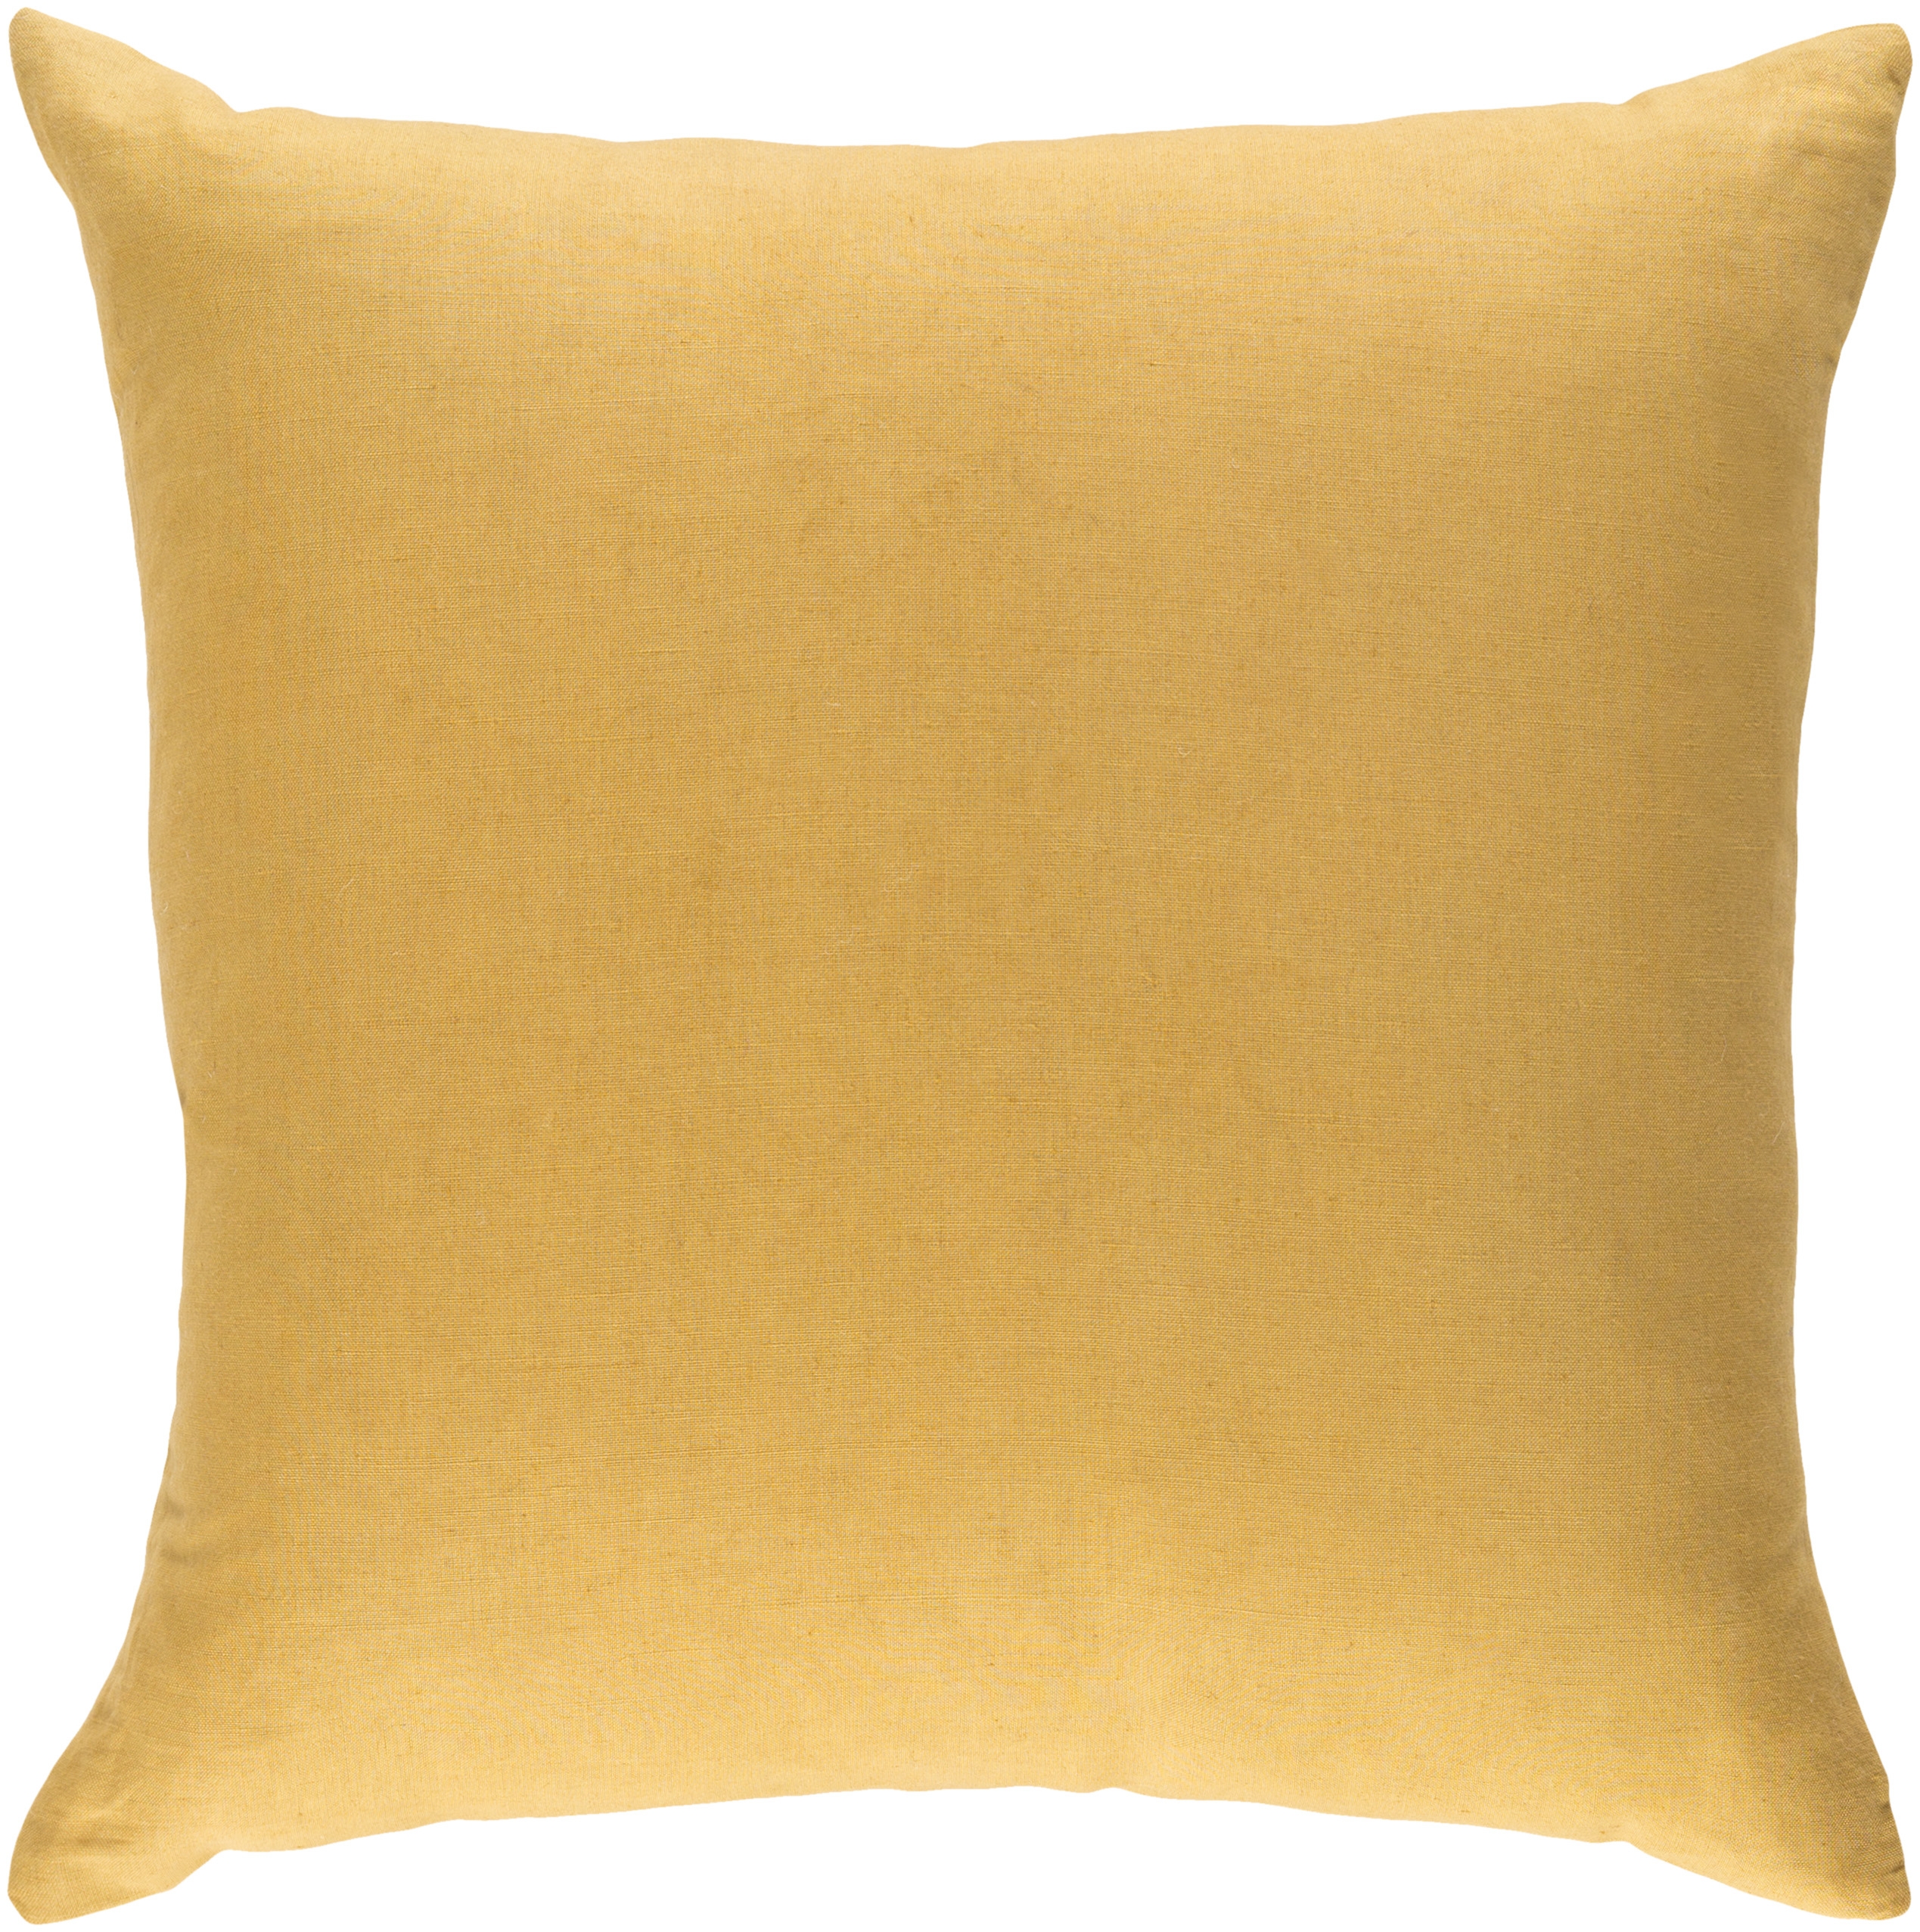 Ethiopia Throw Pillow, 18" x 18", with down insert - Image 0